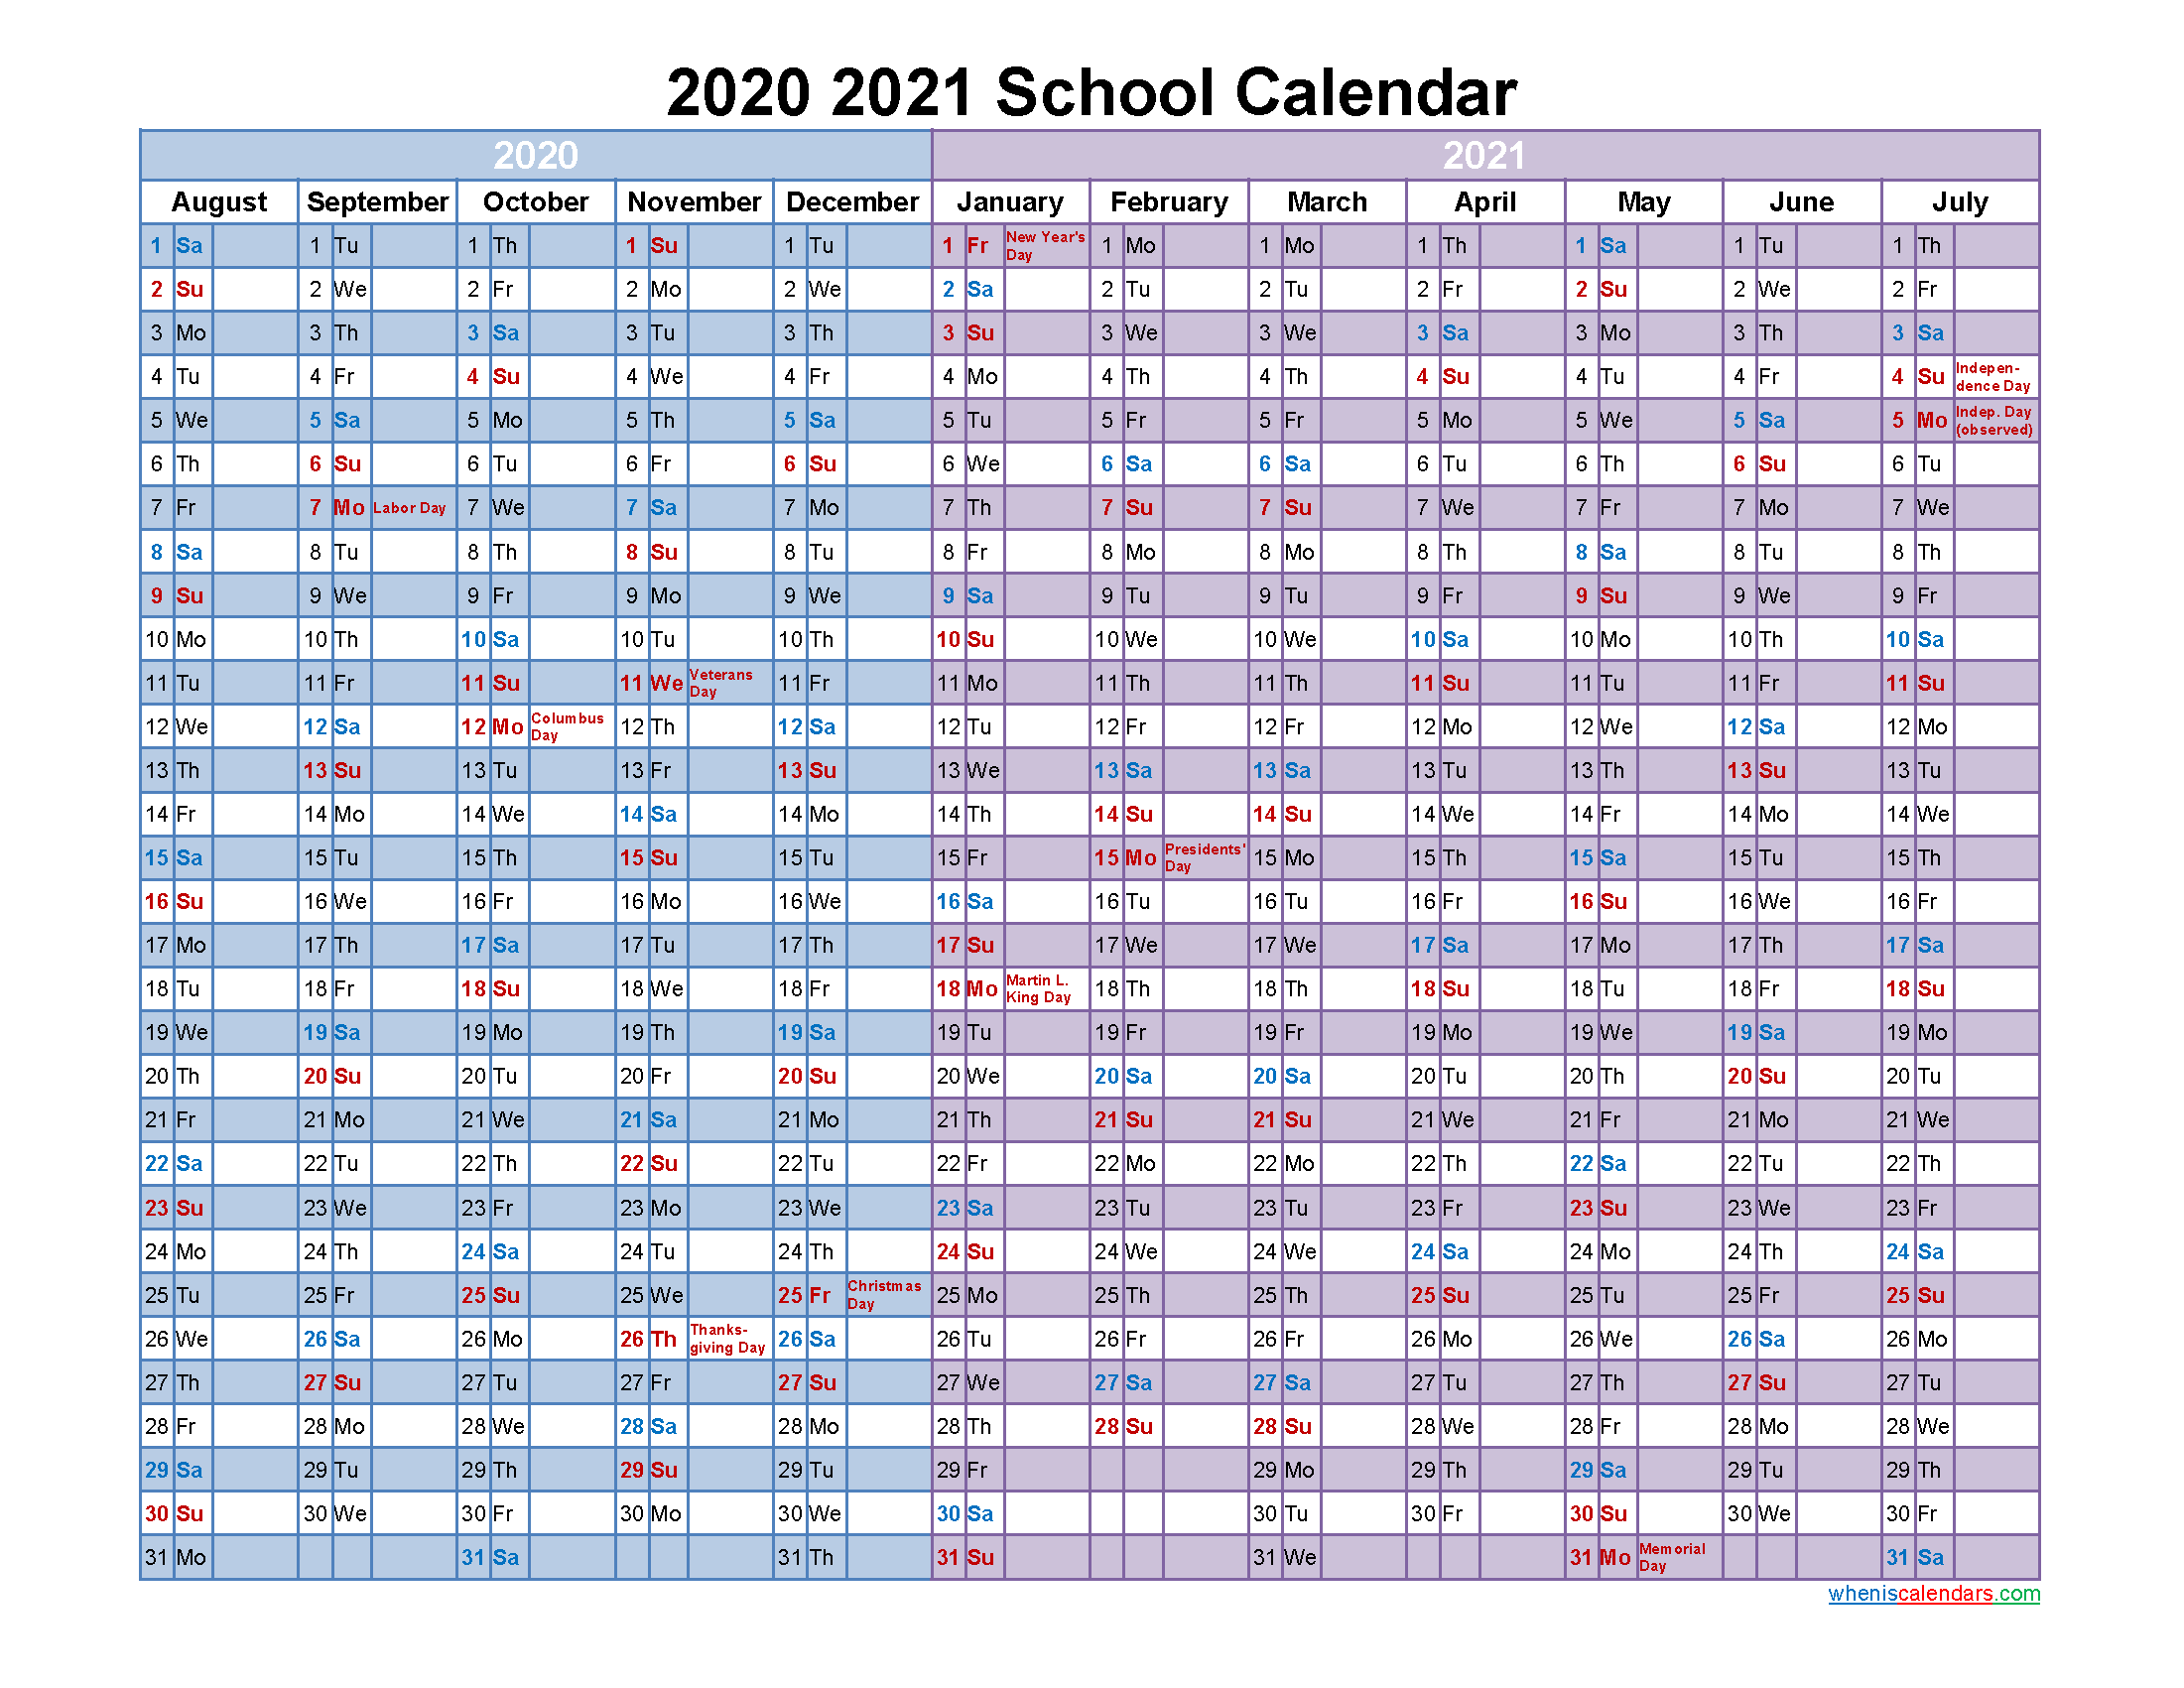 2020 and 2021 School Calendar Printable - Template No.21scl53